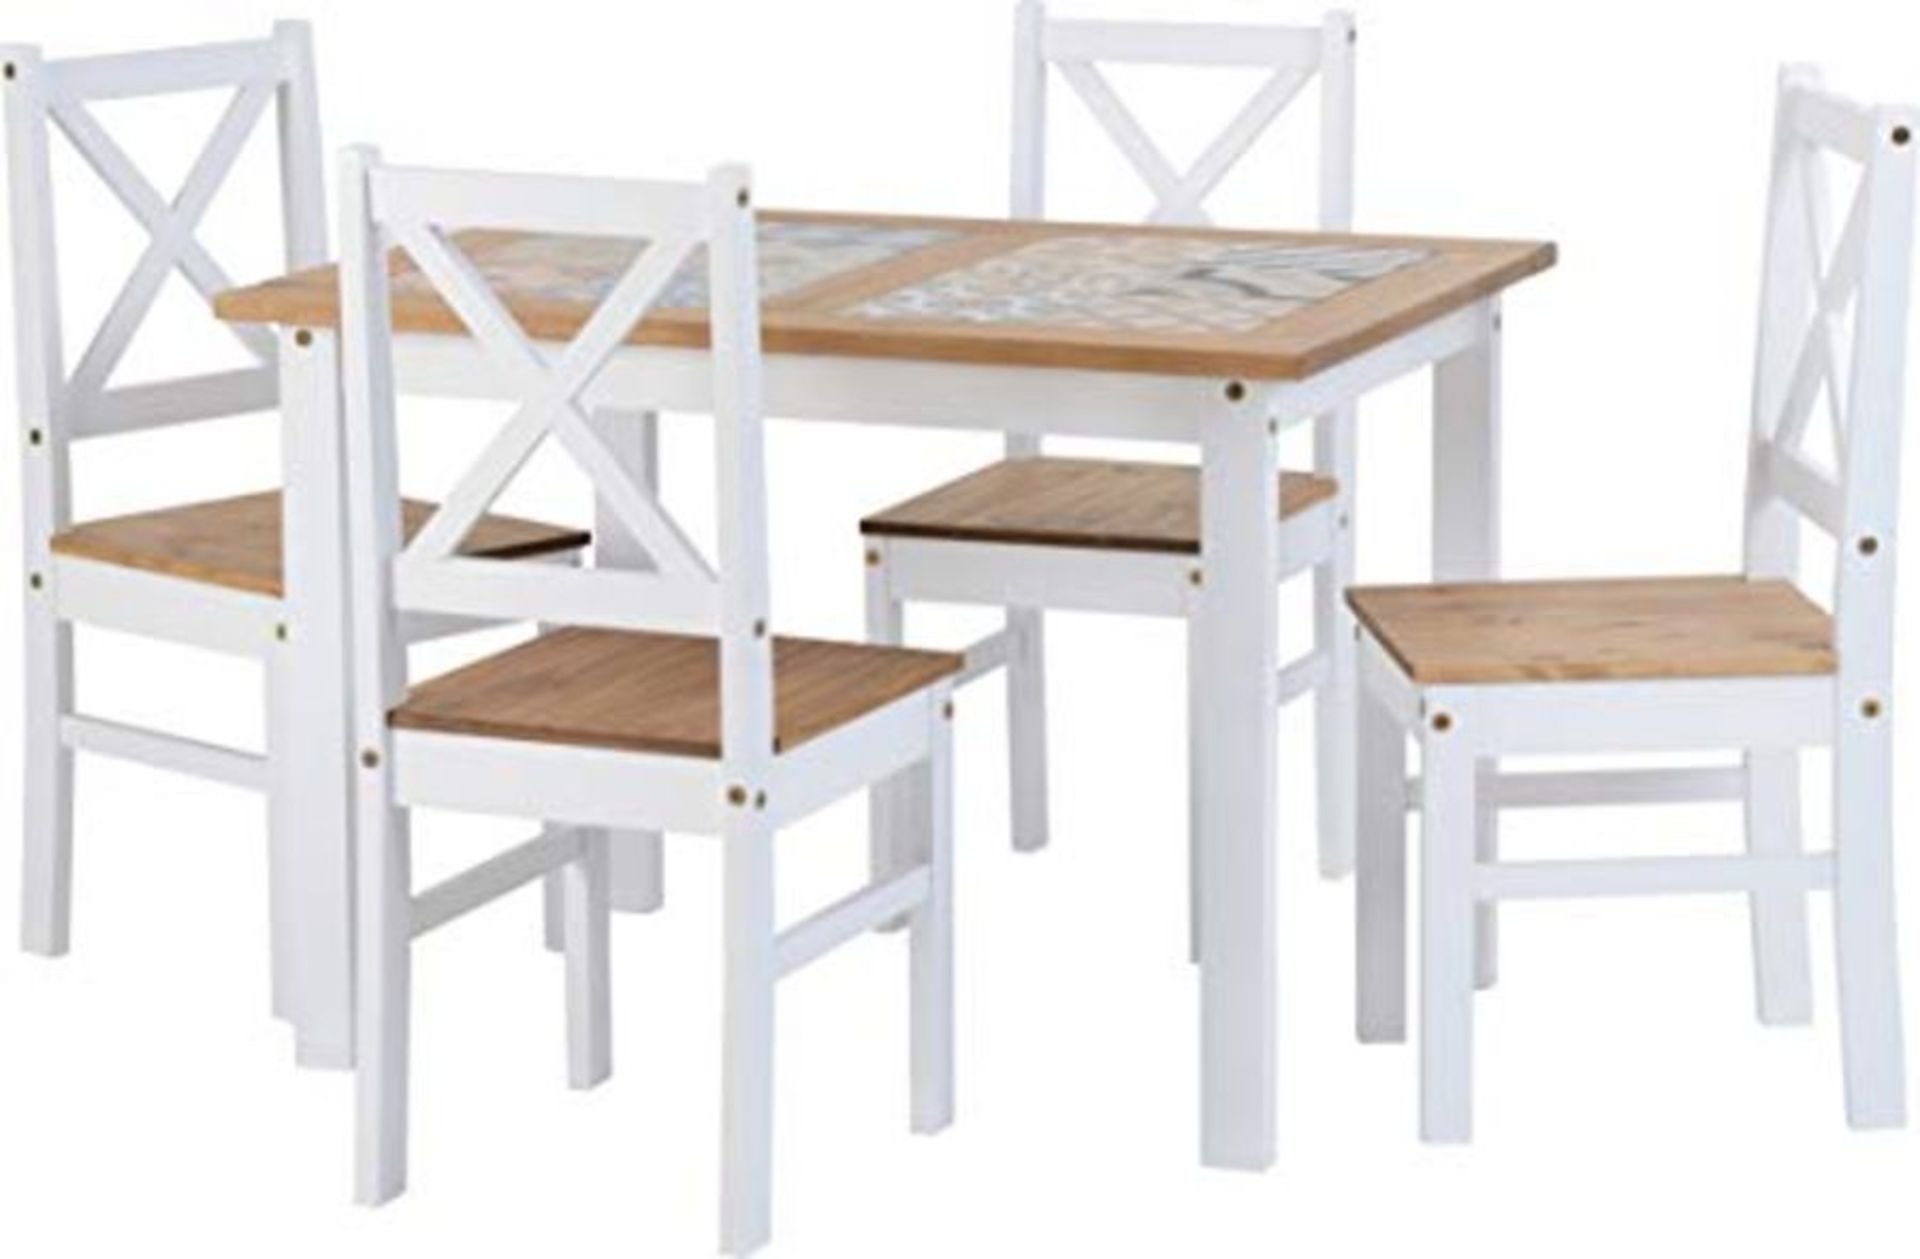 RRP £129.00 Seconique Salvador 1Plus4 Tile Top Dining Set, White, Wood, 4 Seater